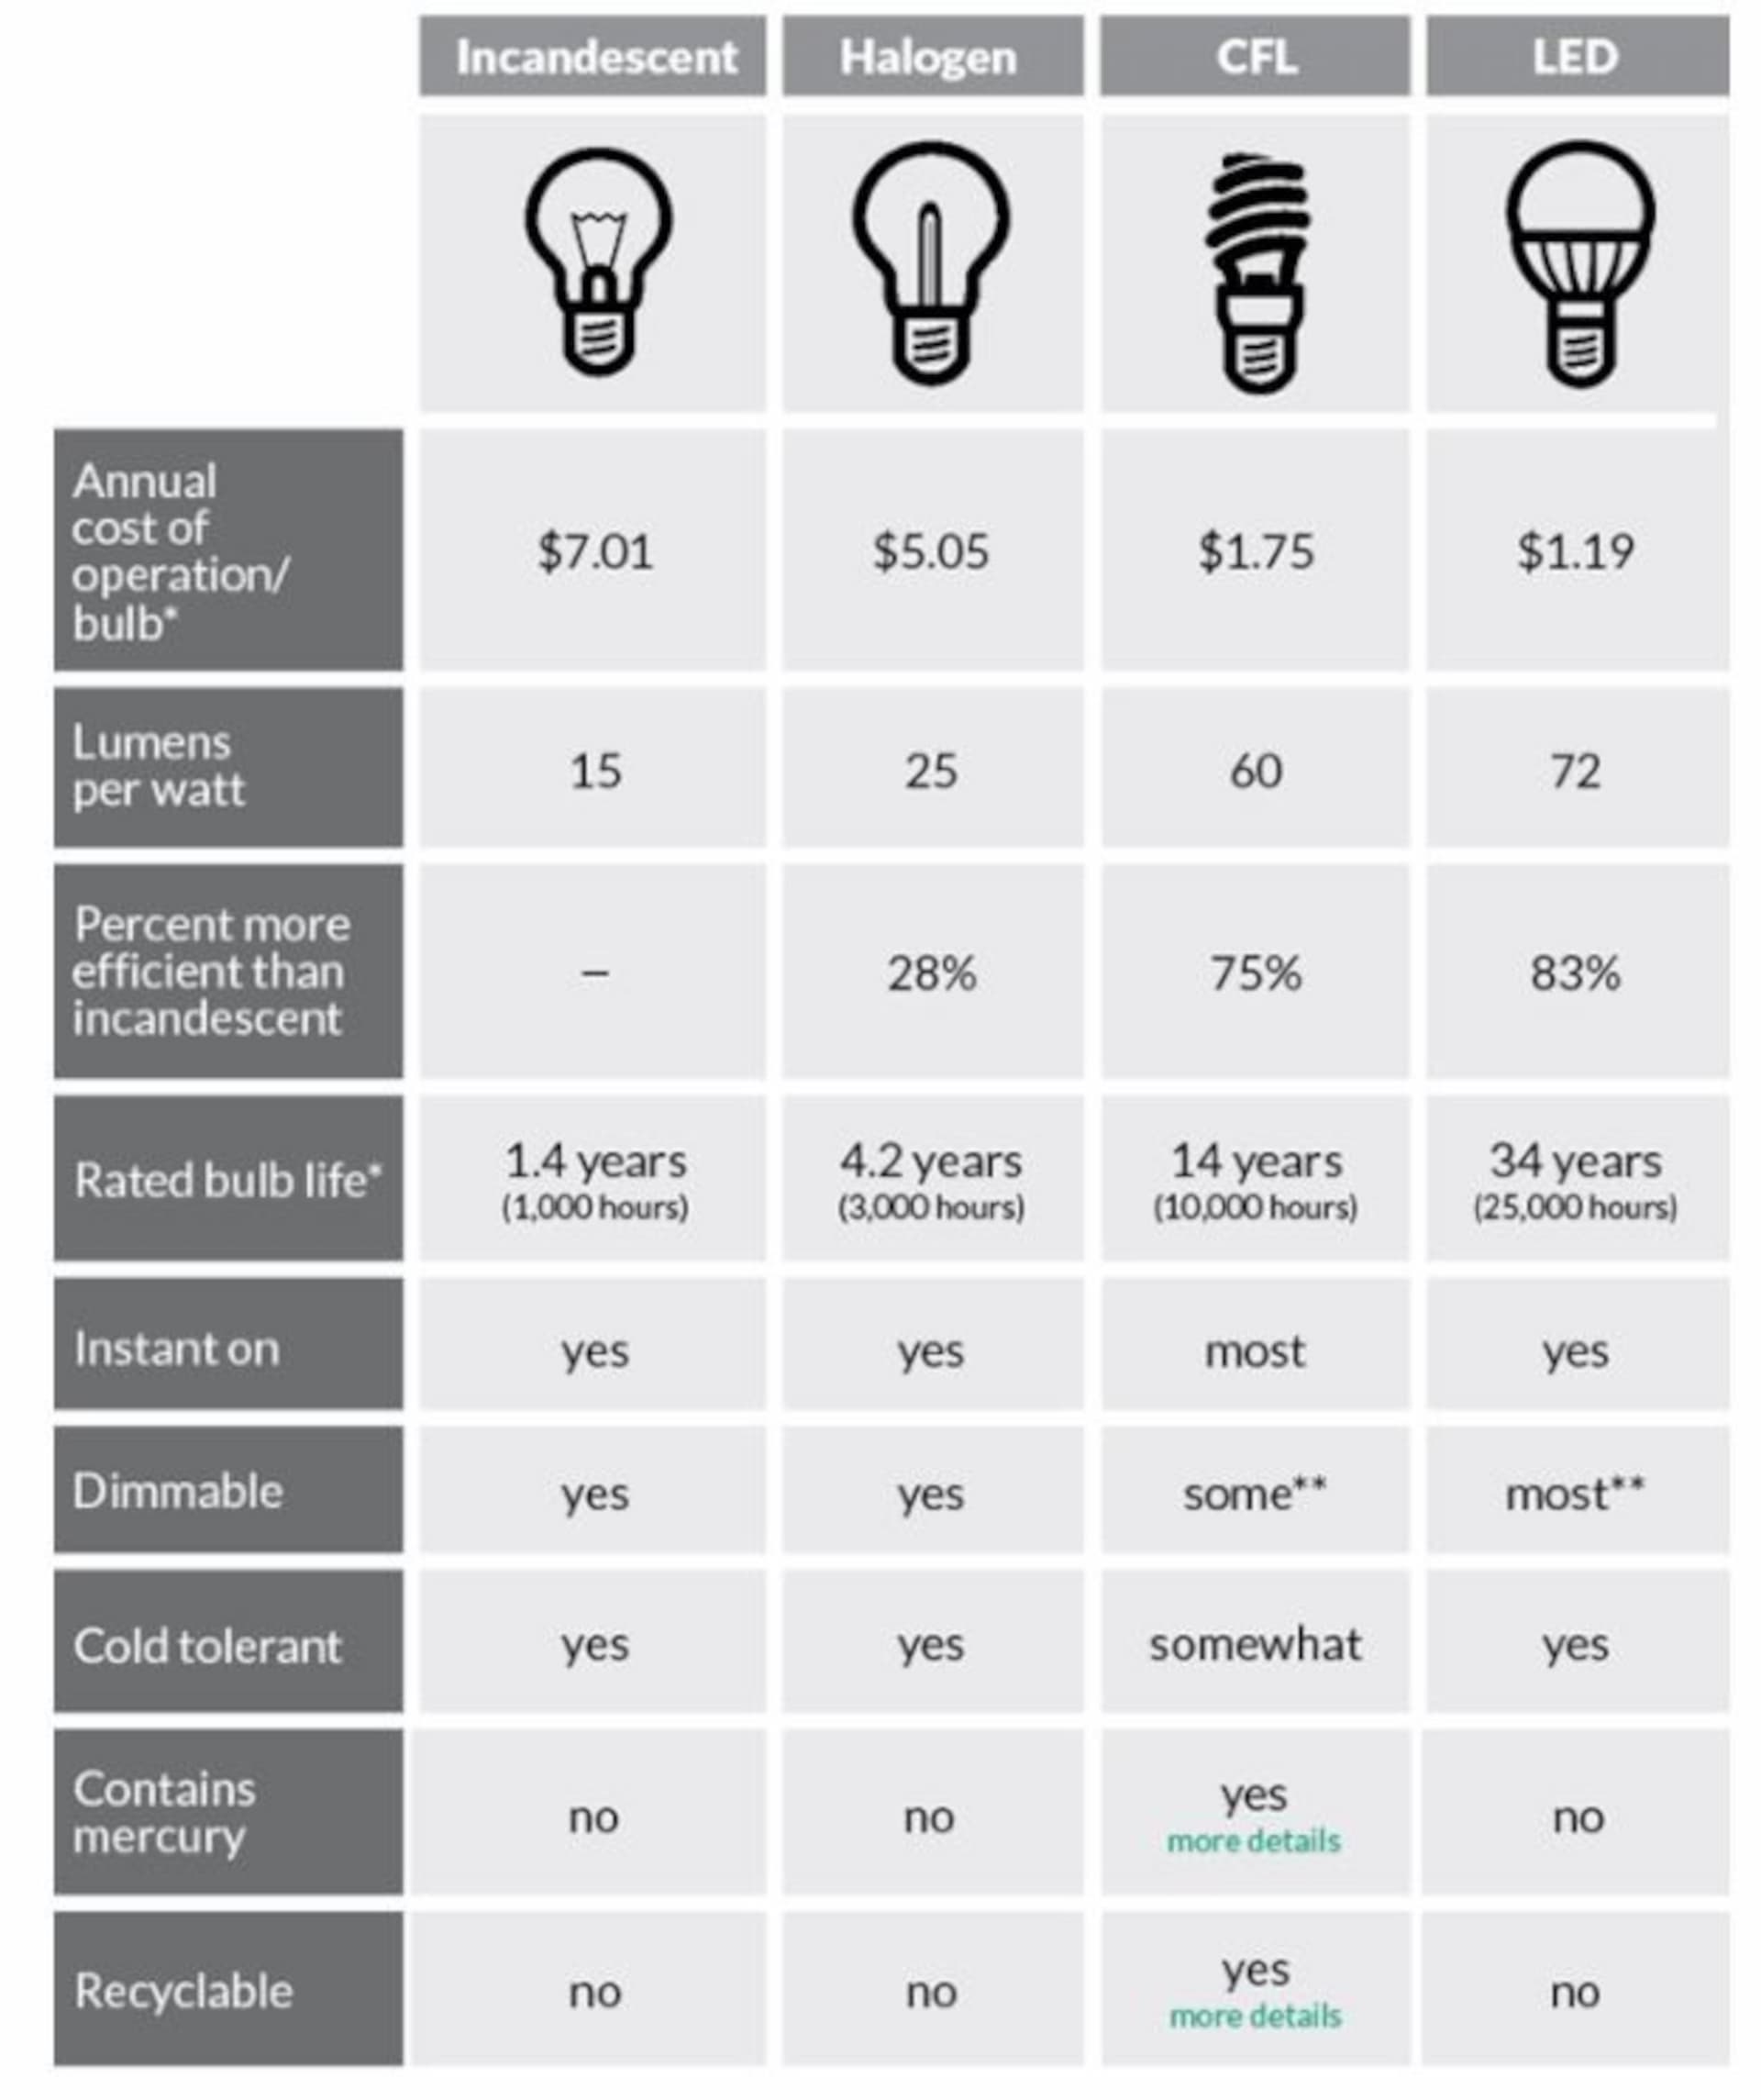 CFL's vs. Halogen vs. Fluorescent Incandescent vs. LED